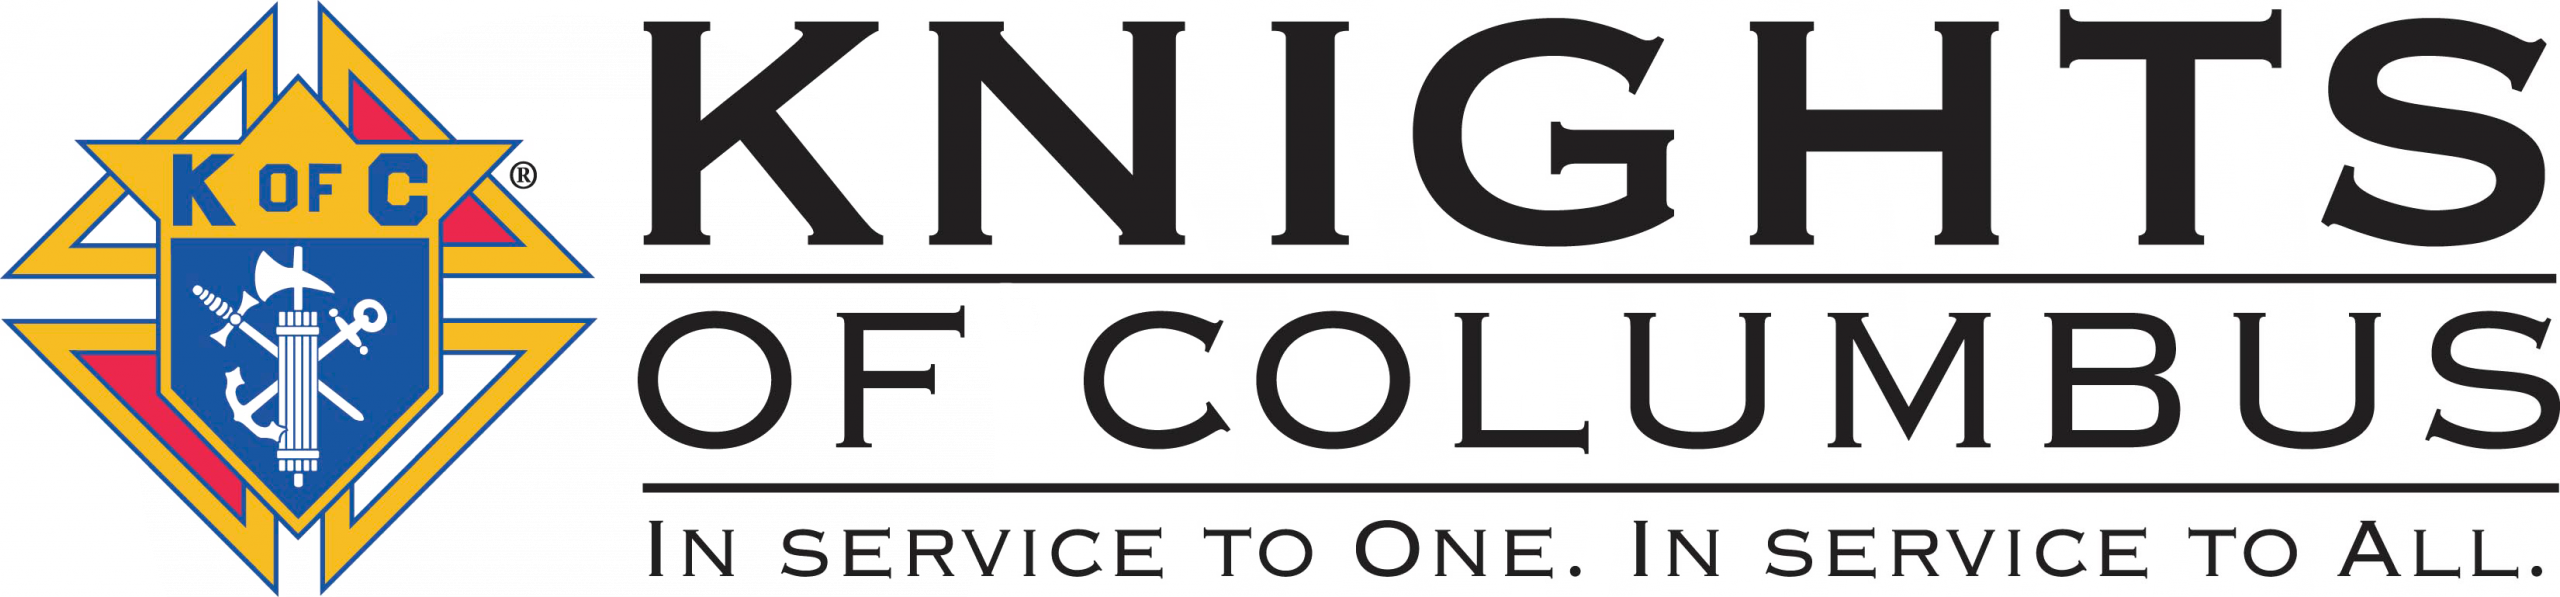 knight of columbus logo